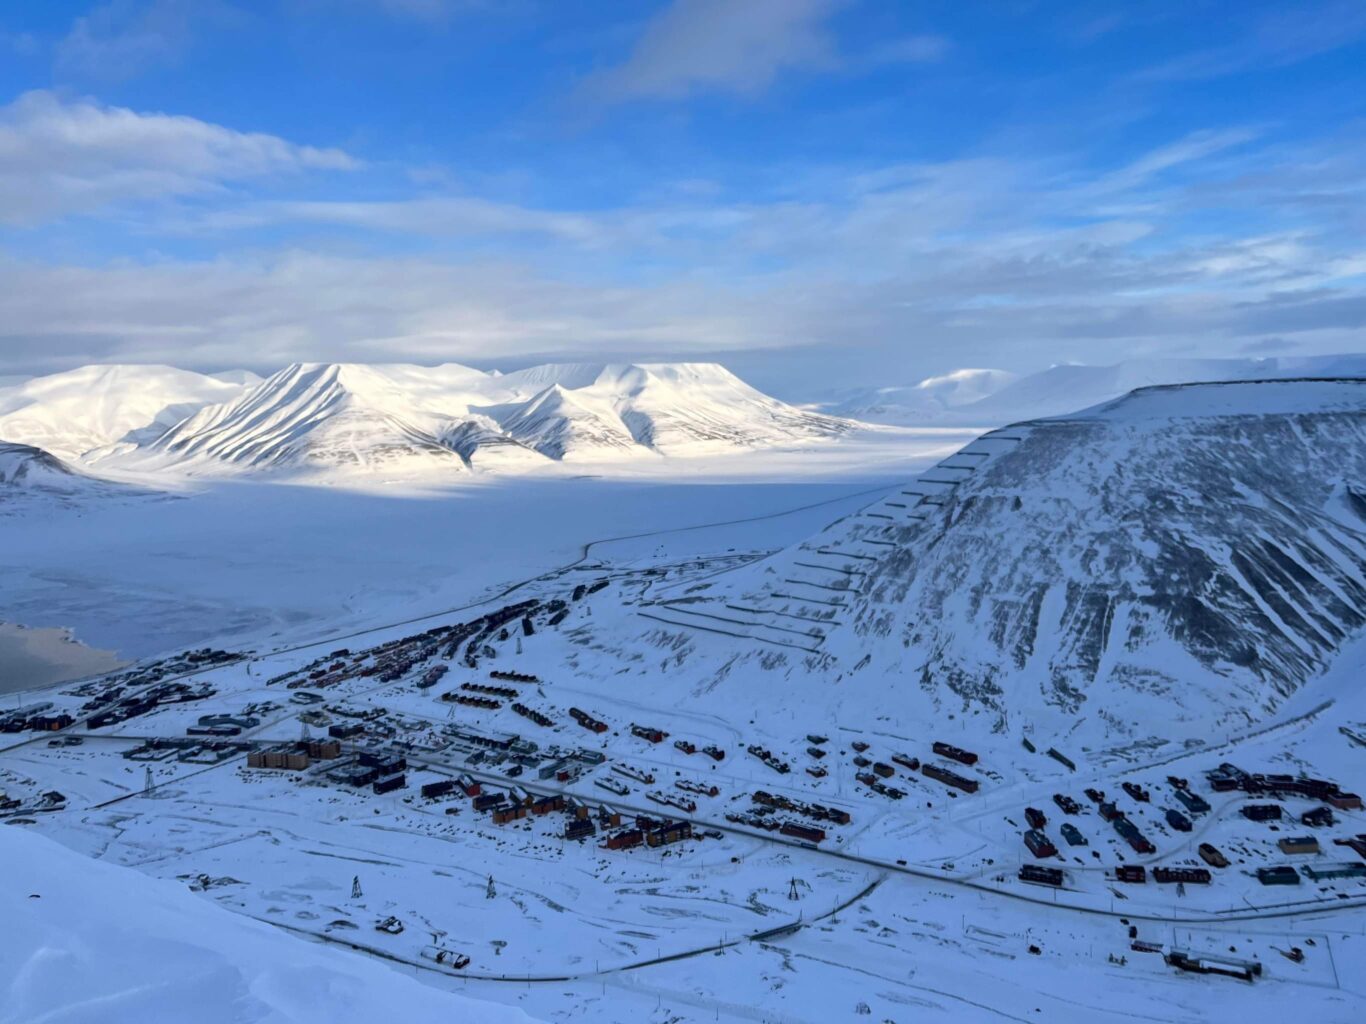 Longyearbyen, Svalbard, at 78 degrees North. Photo by Alexandra Meyer.